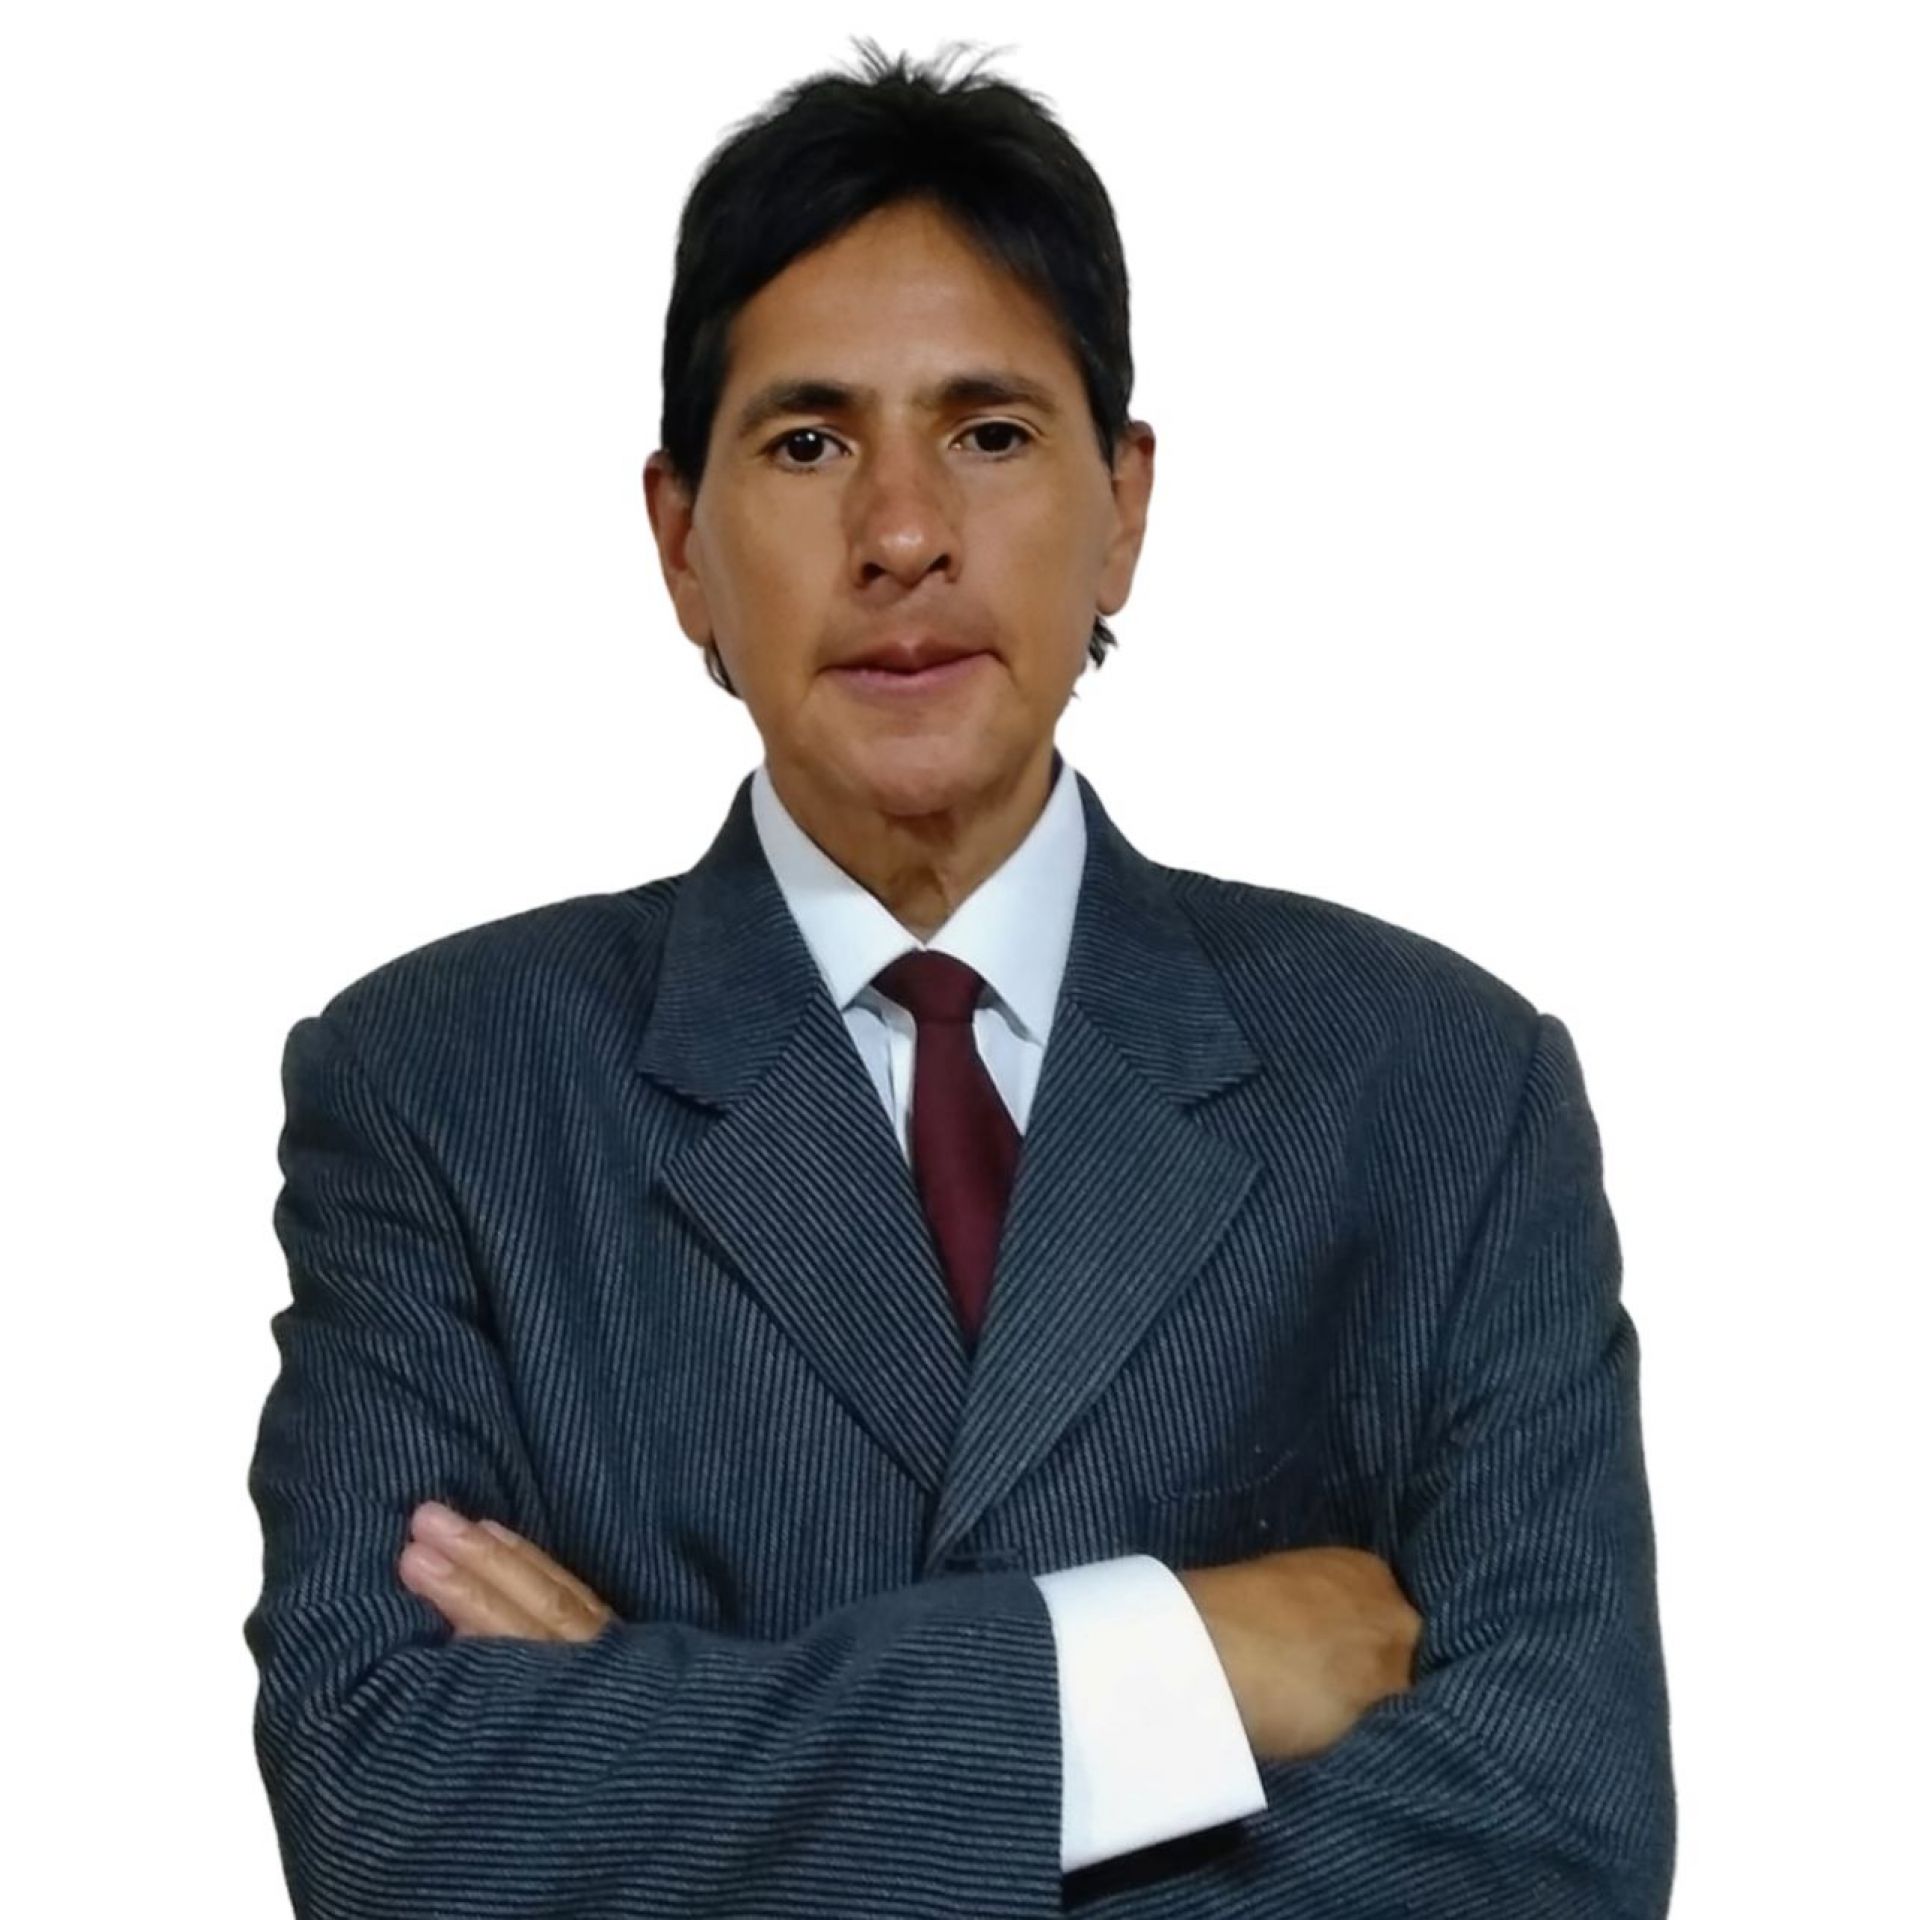 Ramiro Jauregui Maldonado